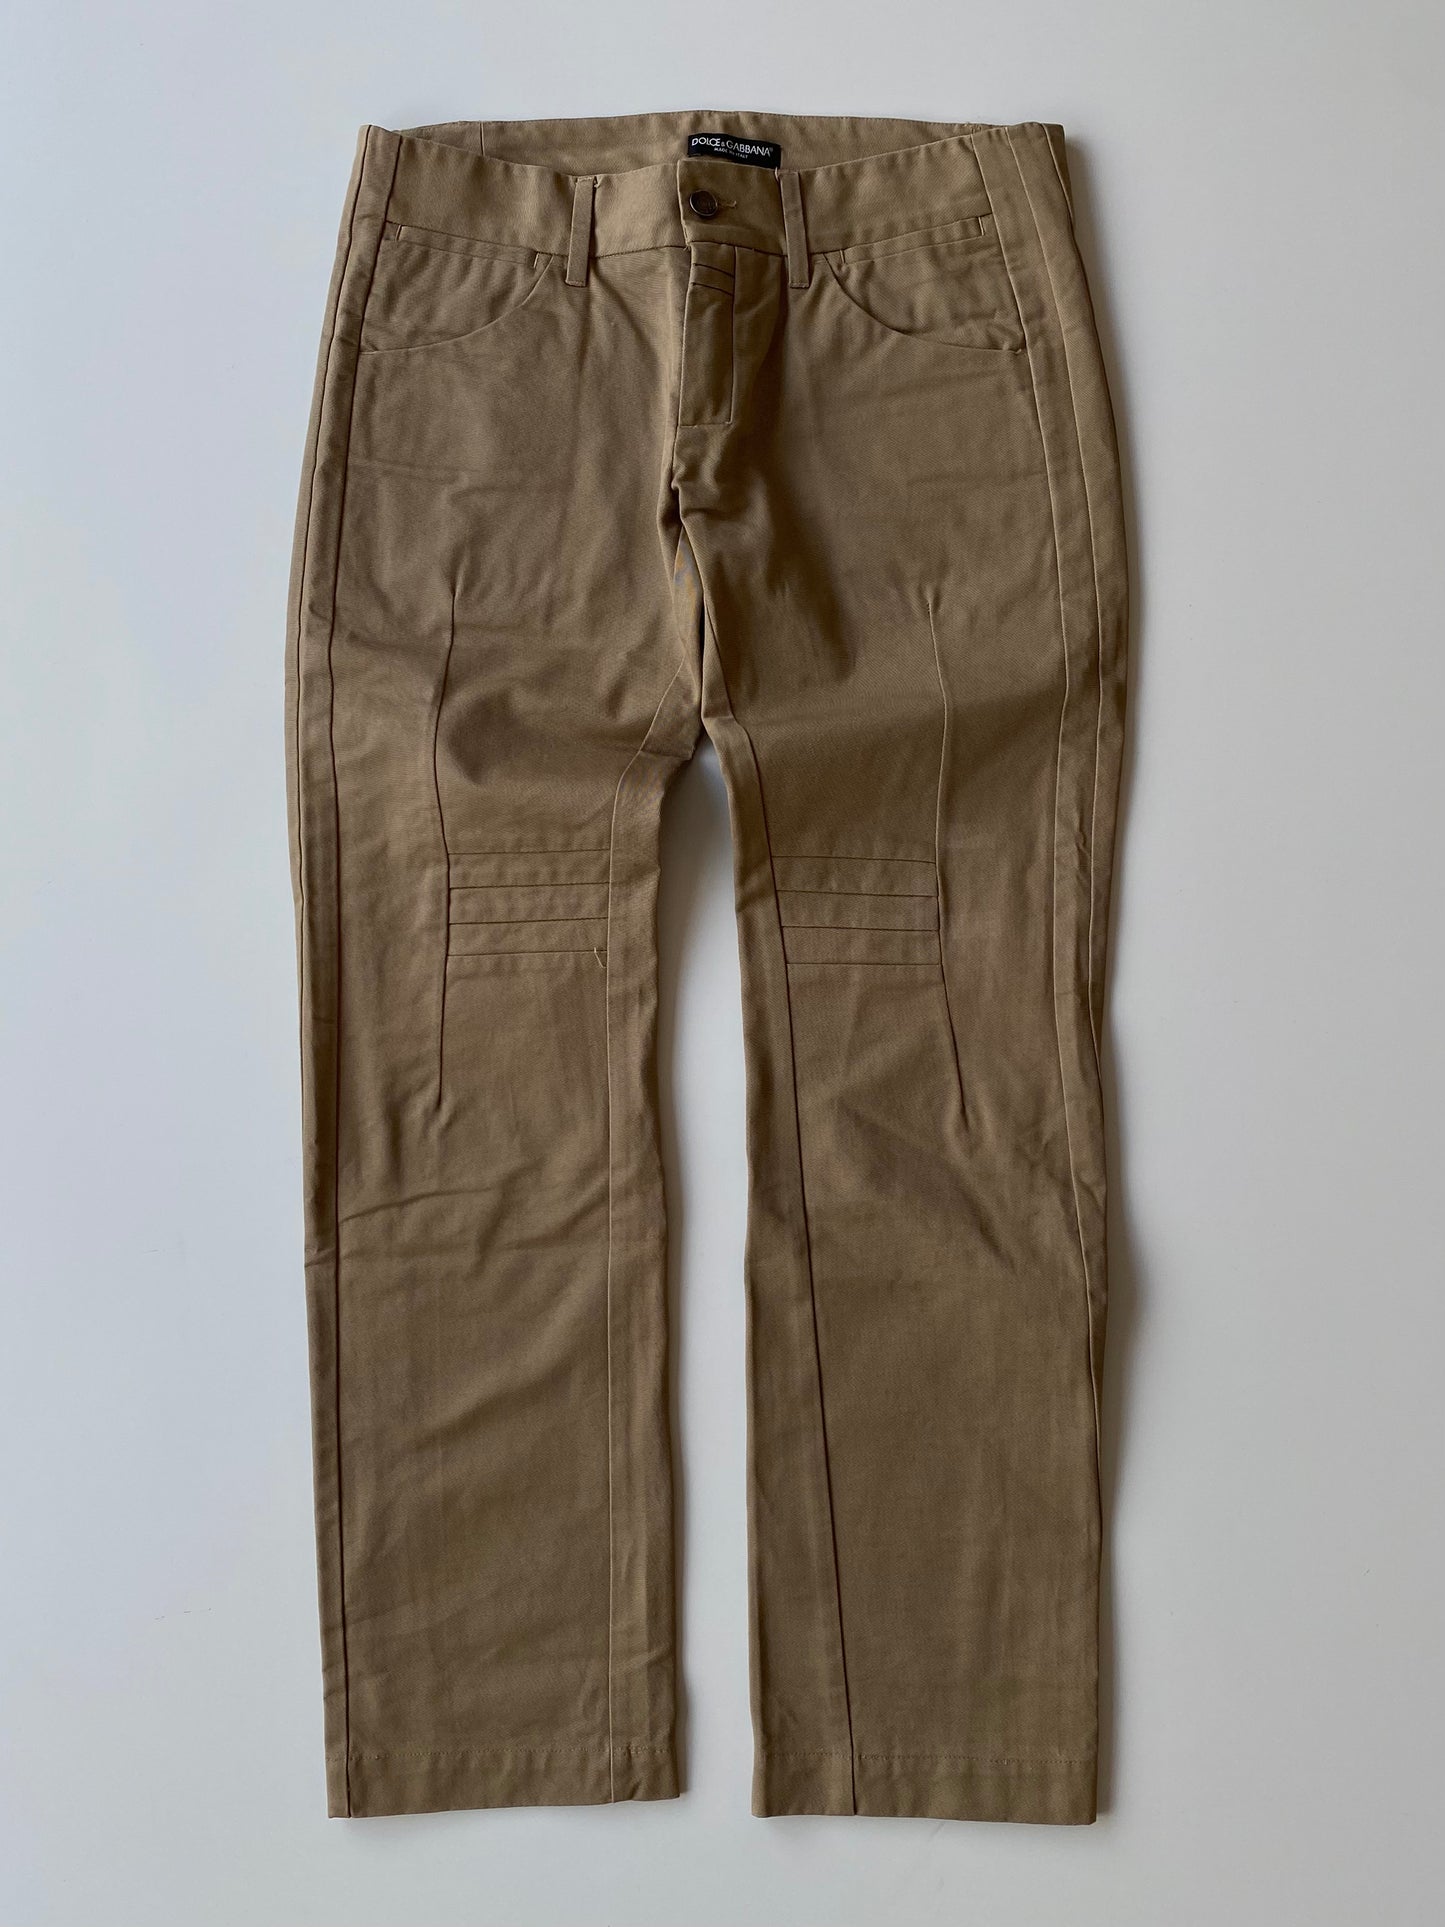 Dolce & Gabbana 2000 Archives Moto Technical Pants